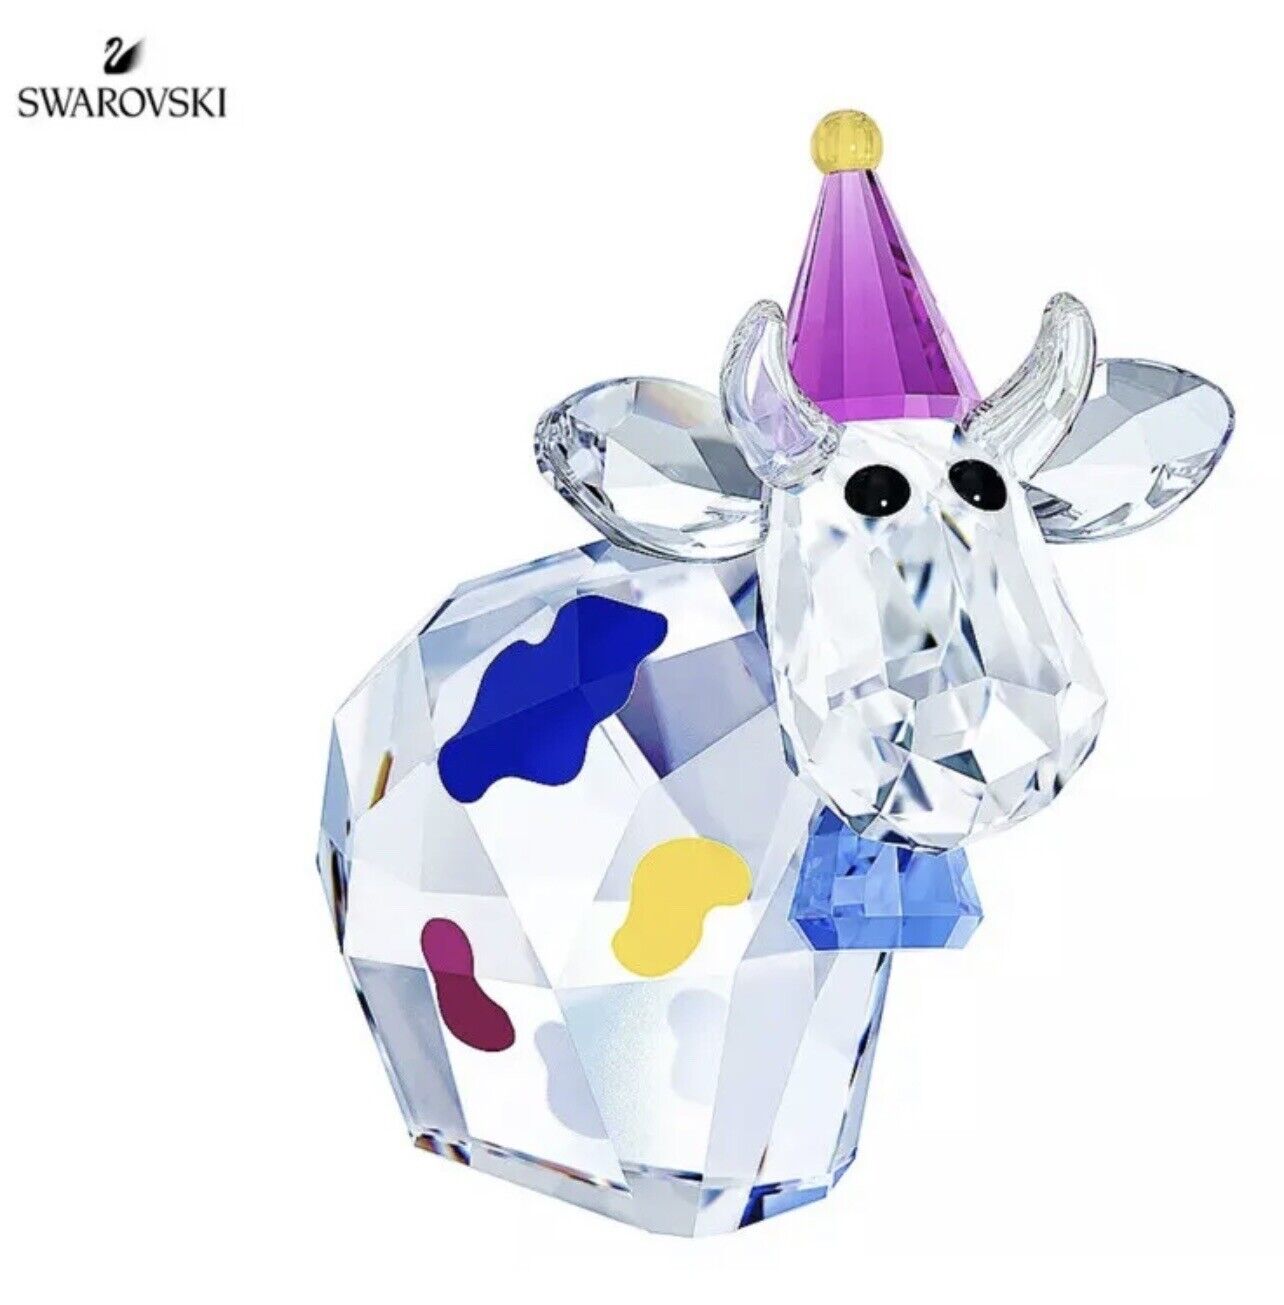 NIB Authentic Swarovski Party Mo 2018 Limited Edition Crystal Figurine #5301580